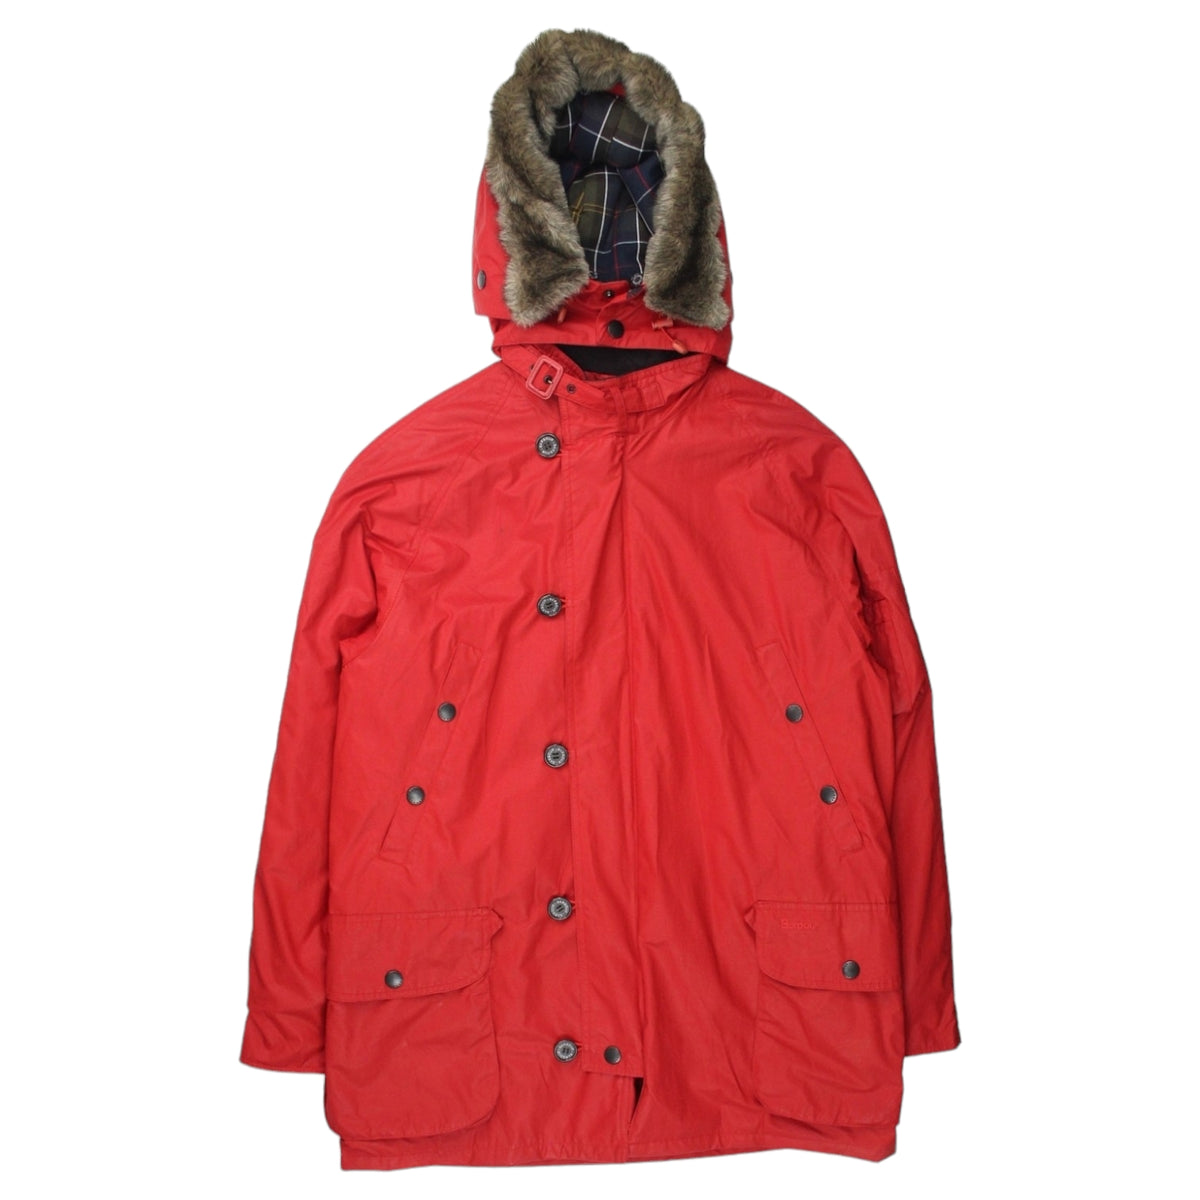 Barbour Red Waterproof & Breathable Coat